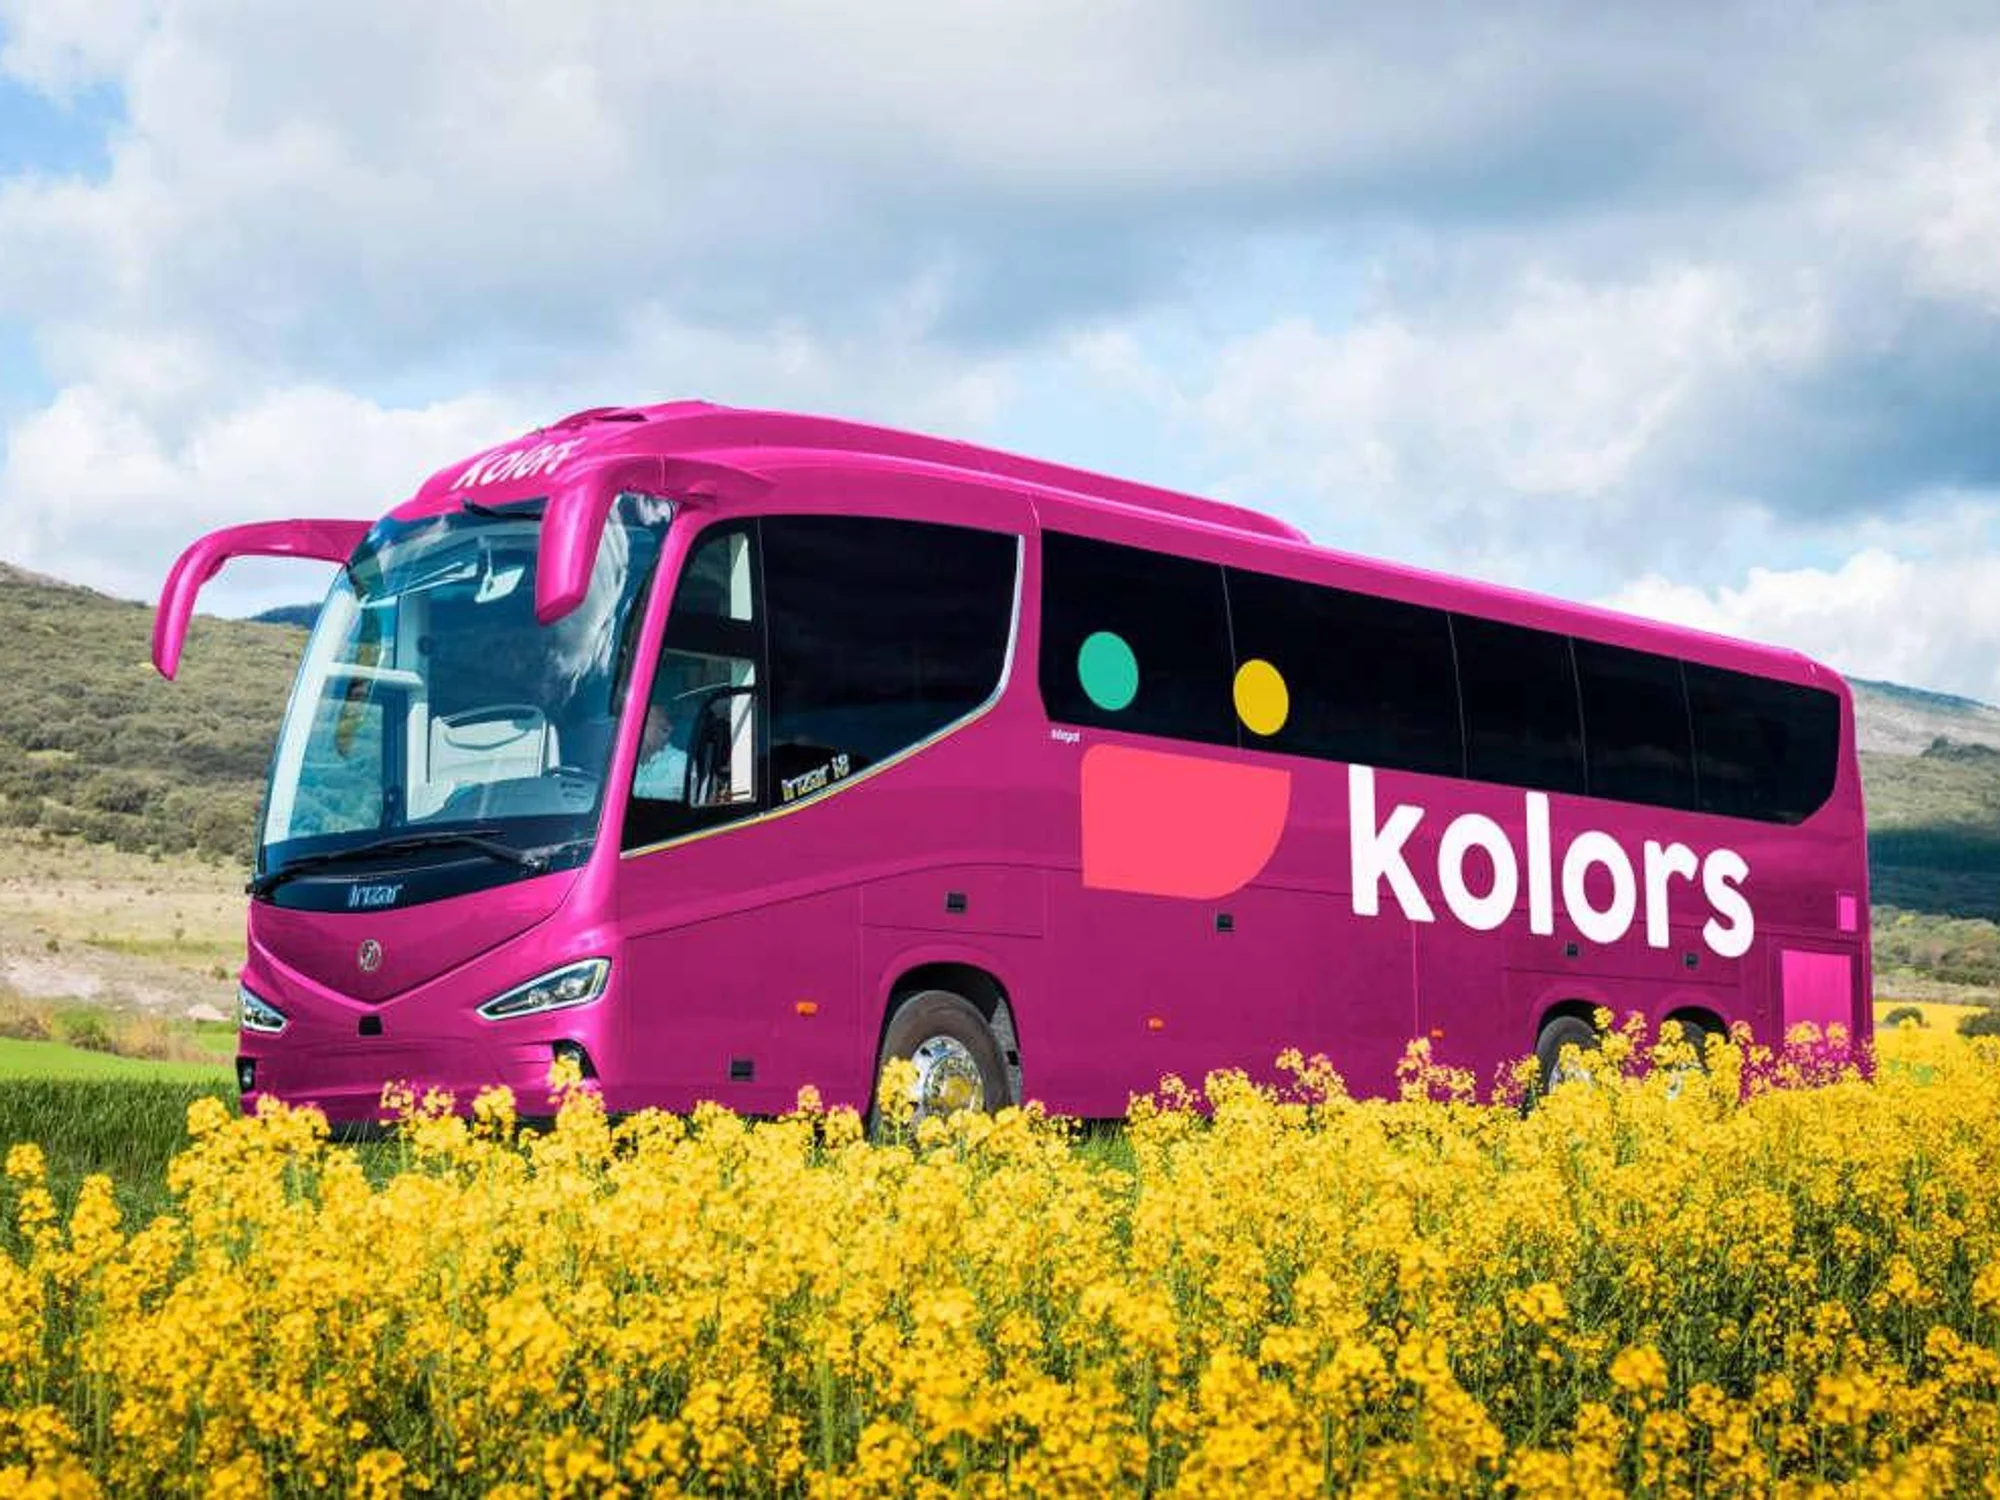 kolors-expands-its-corporate-bus-travel-service-with-acquisition-of-urbvan